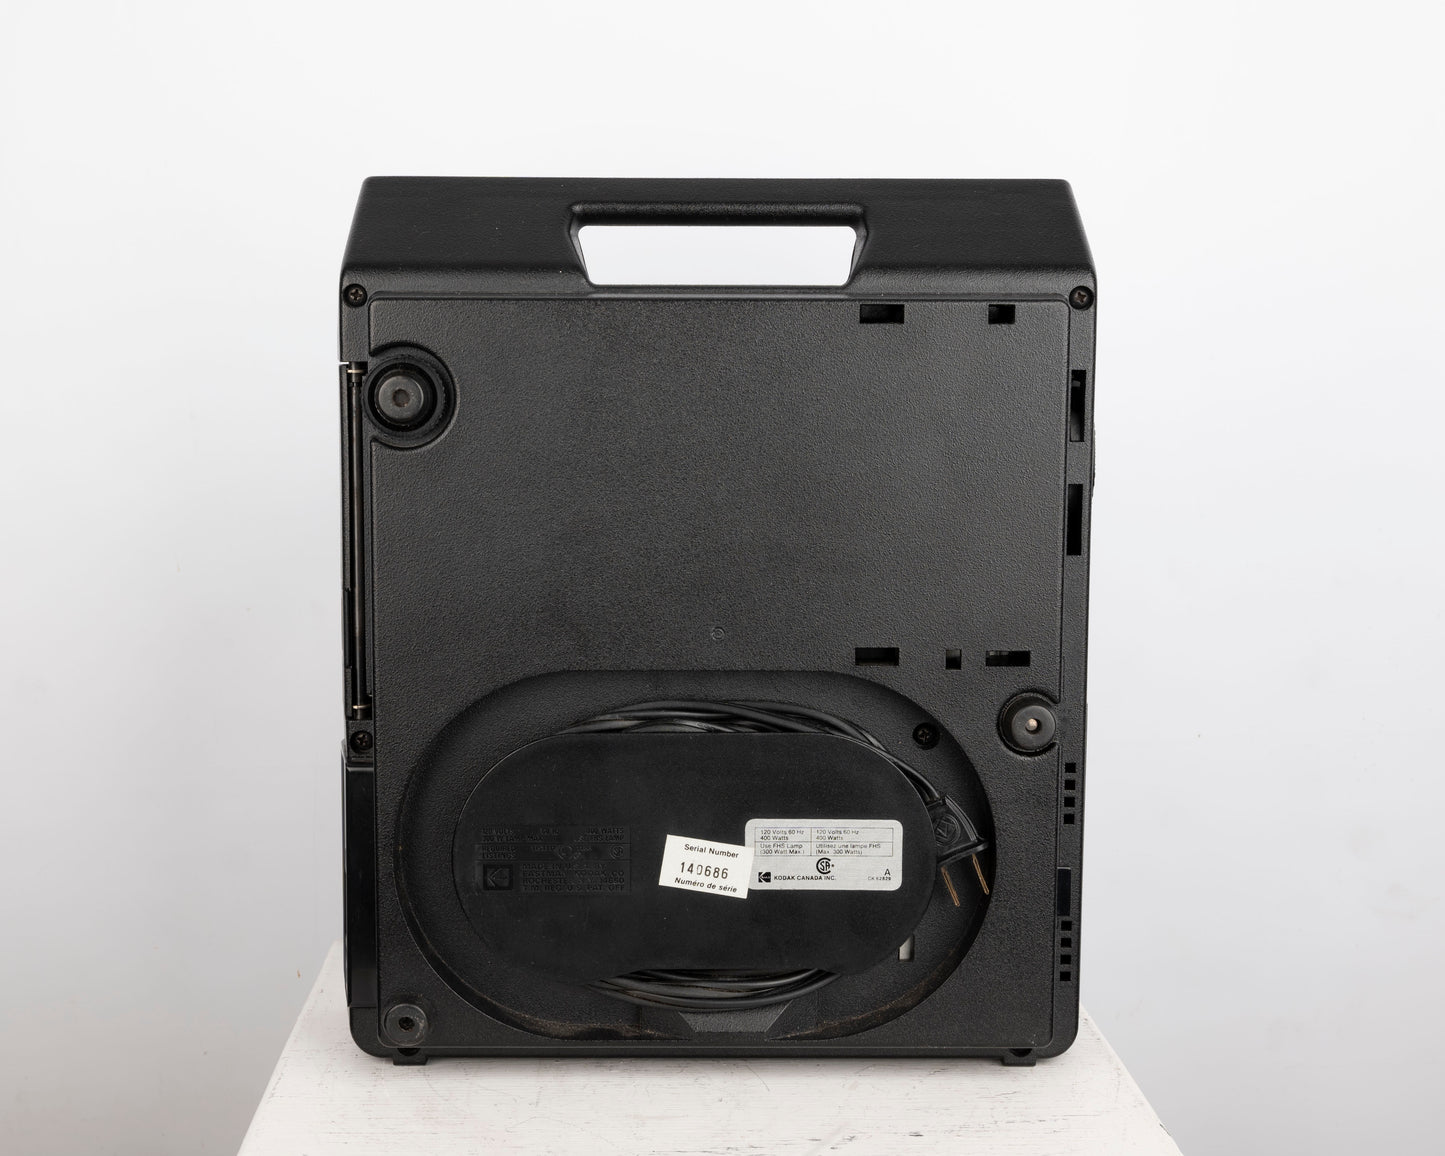 Kodak Carousel 4400 35mm slide projector w/ Ektanar C 102mm f2.8 lens (serial 140686)